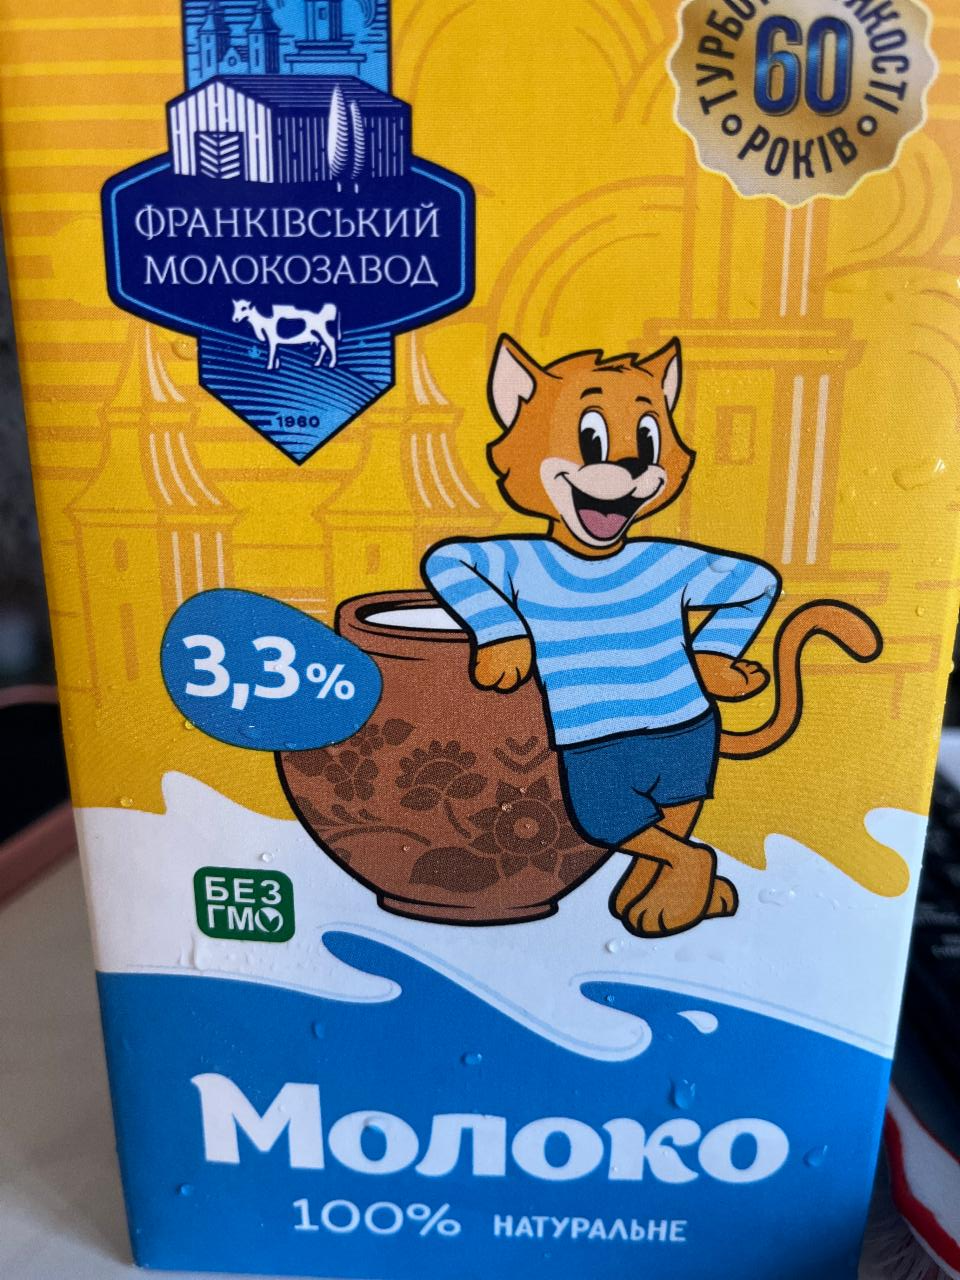 Фото - Молоко 3.3% Франковский молокозавод